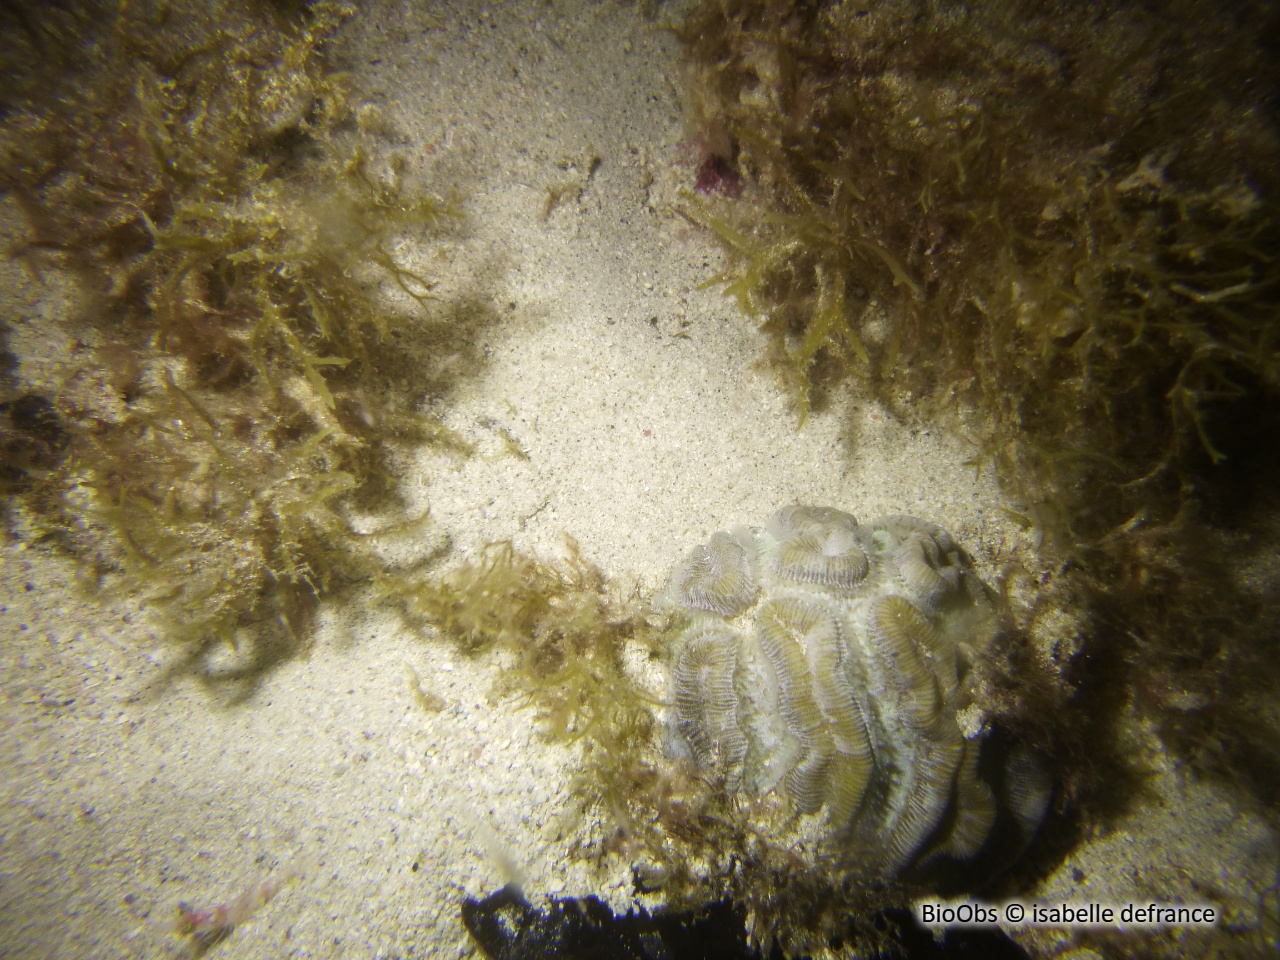 Rose de corail - Manicina areolata - isabelle defrance - BioObs